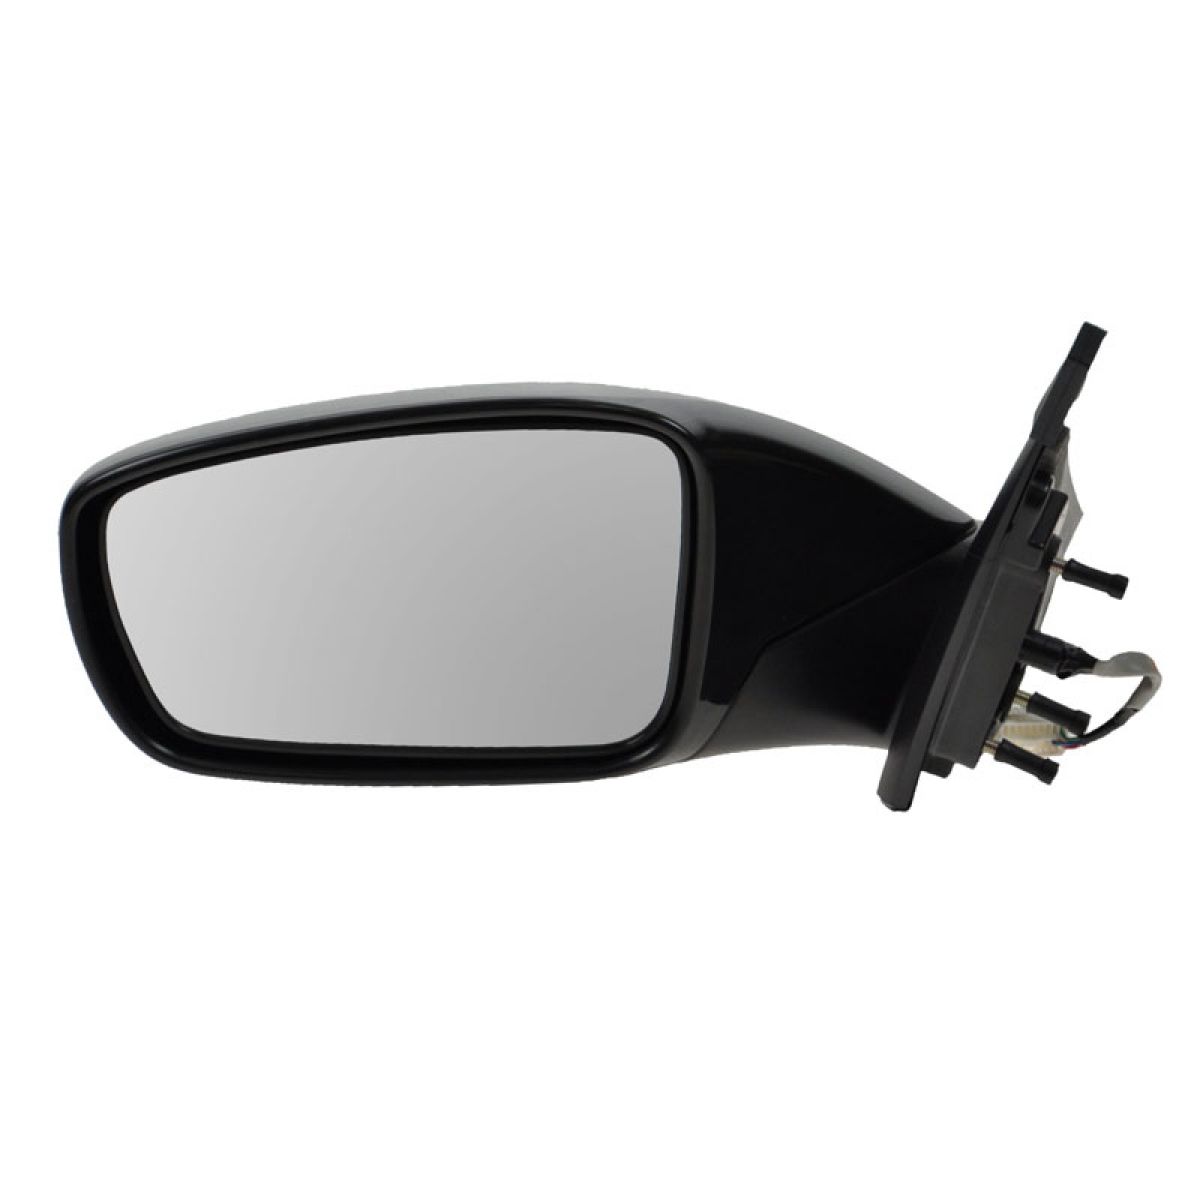 Side View Mirror Power Smooth Black Driver Left LH for 11-13 Sonata | eBay 2013 Hyundai Sonata Driver Side Mirror Replacement